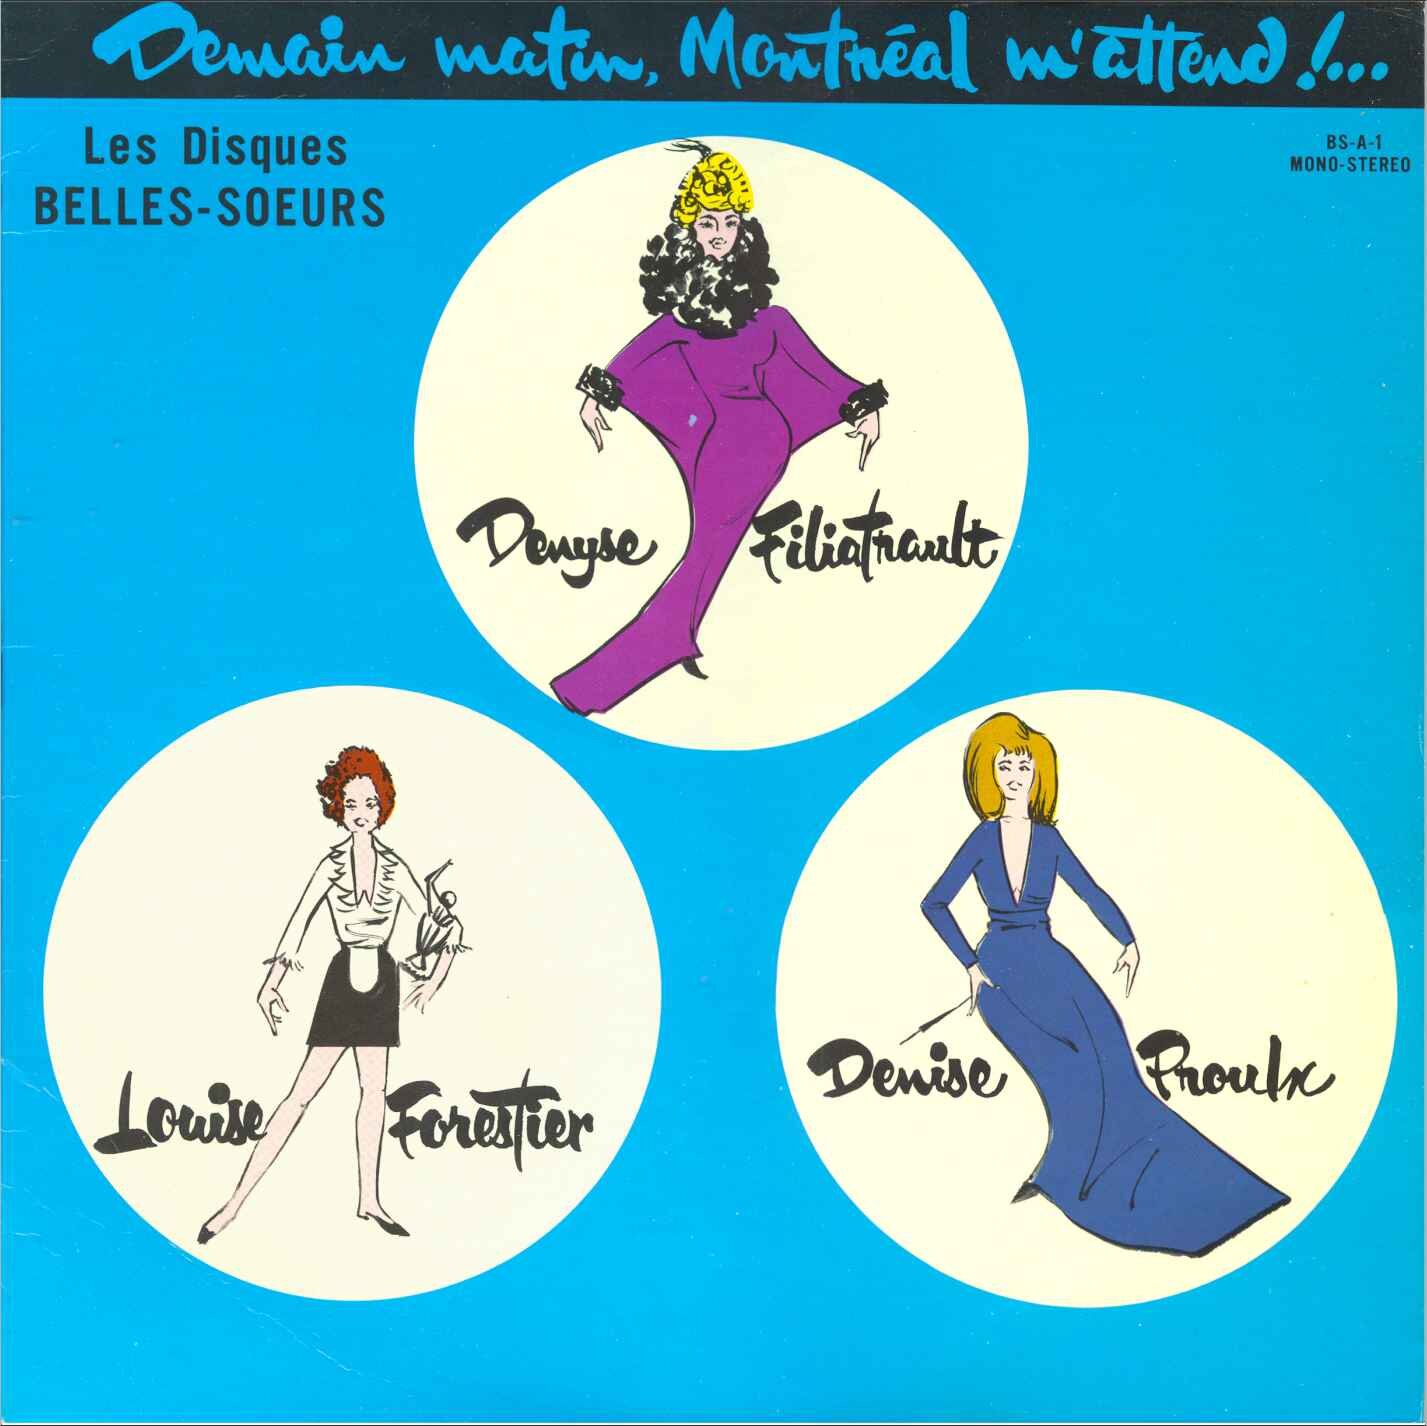 1970-Demain Matin Montréal m'attend_Comédie musicale.jpg